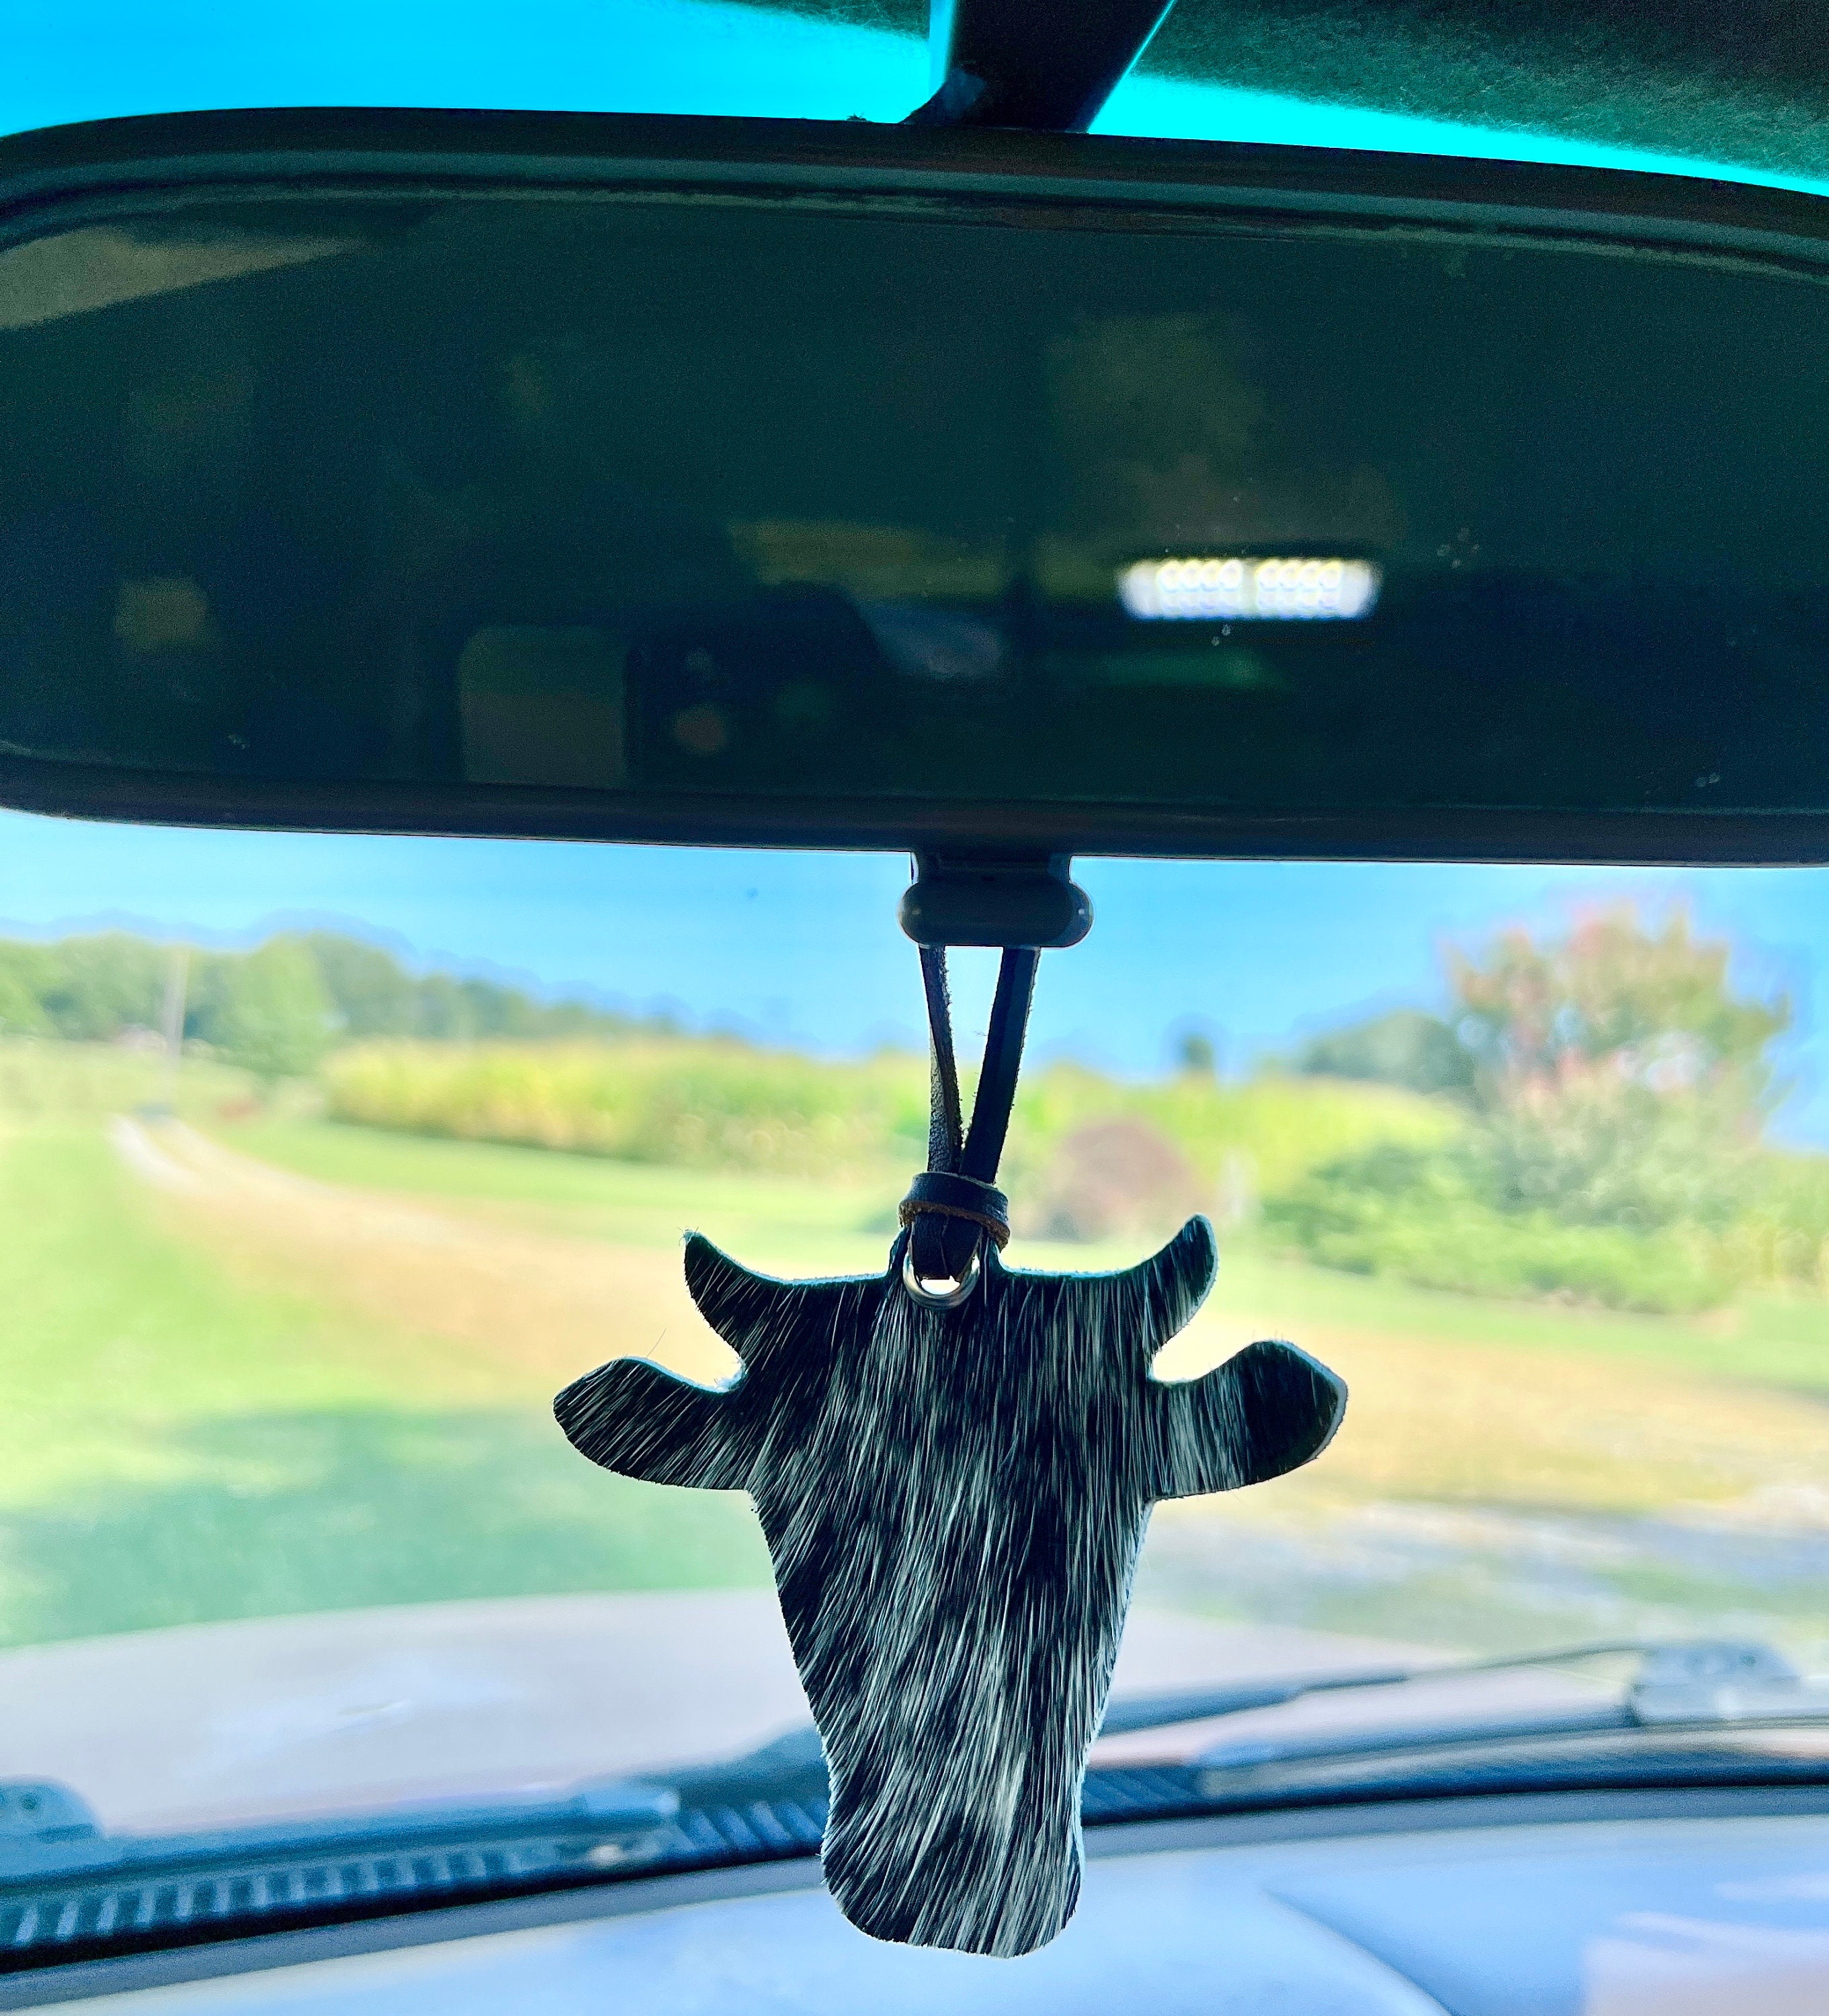 Bull Head Shape Pendant Car Rear View Mirror Charm Hanging